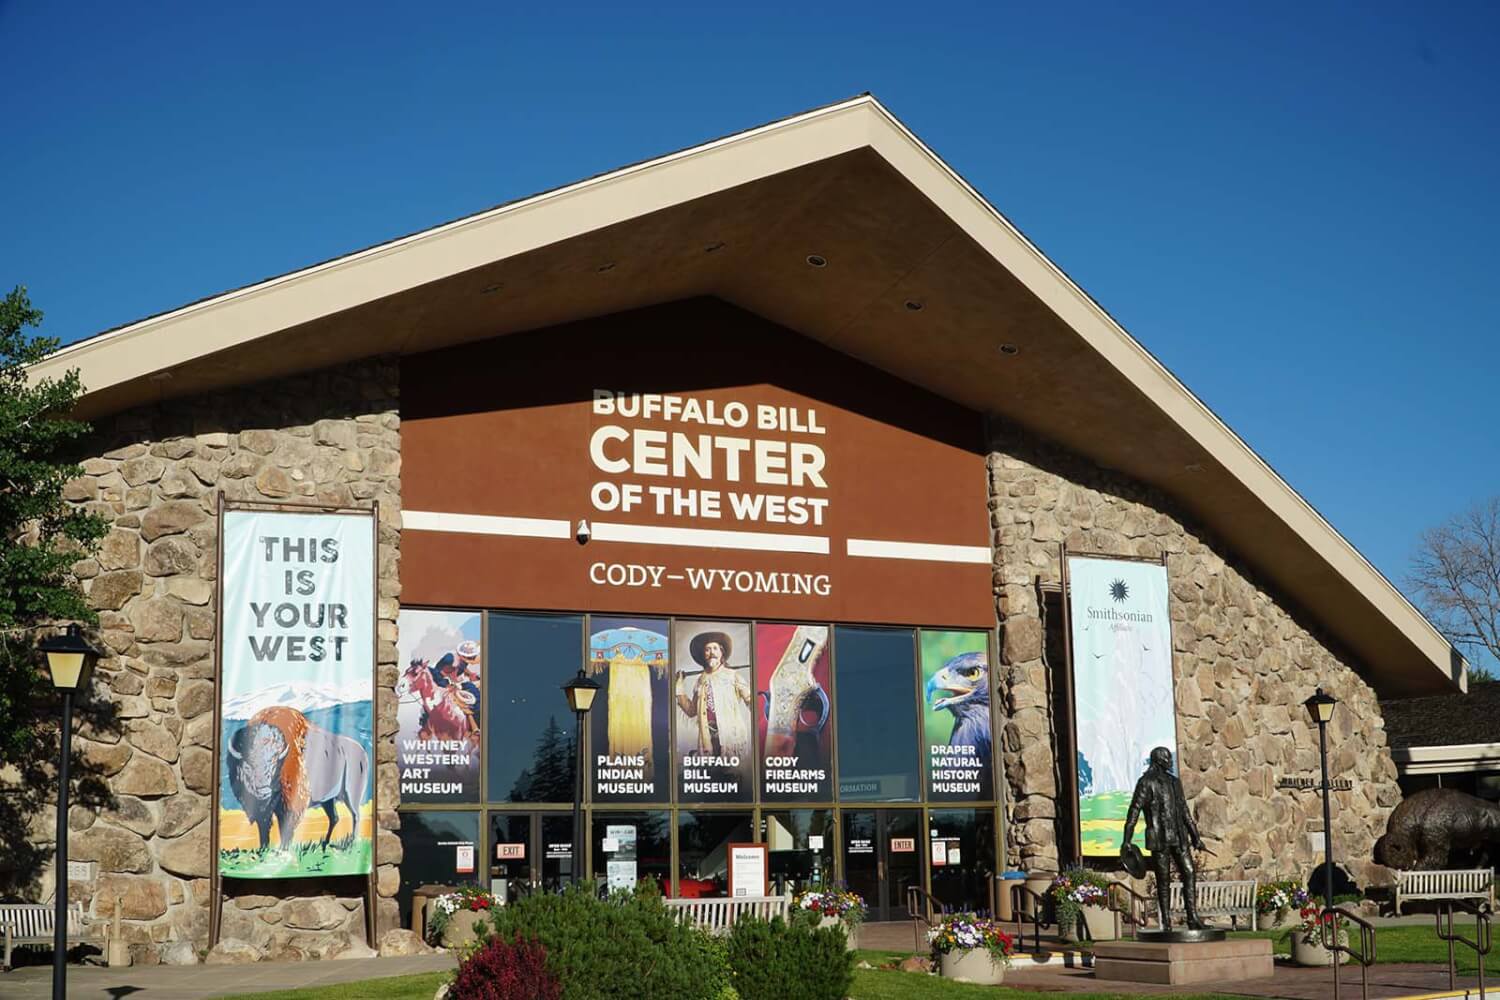  Buffalo Bill Center of the West